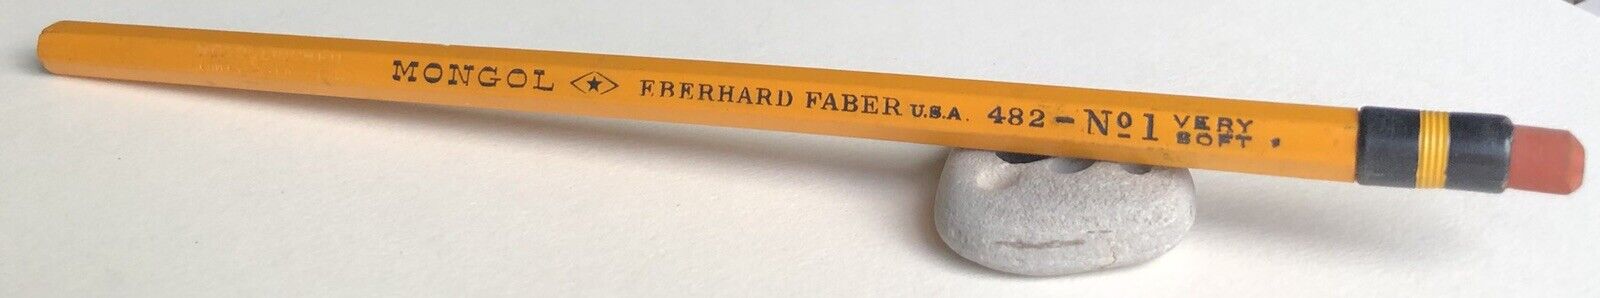 Vintage Eberhard Faber MONGOL 482 Pencil No. 1 Very Soft WWII Era 1940s USA